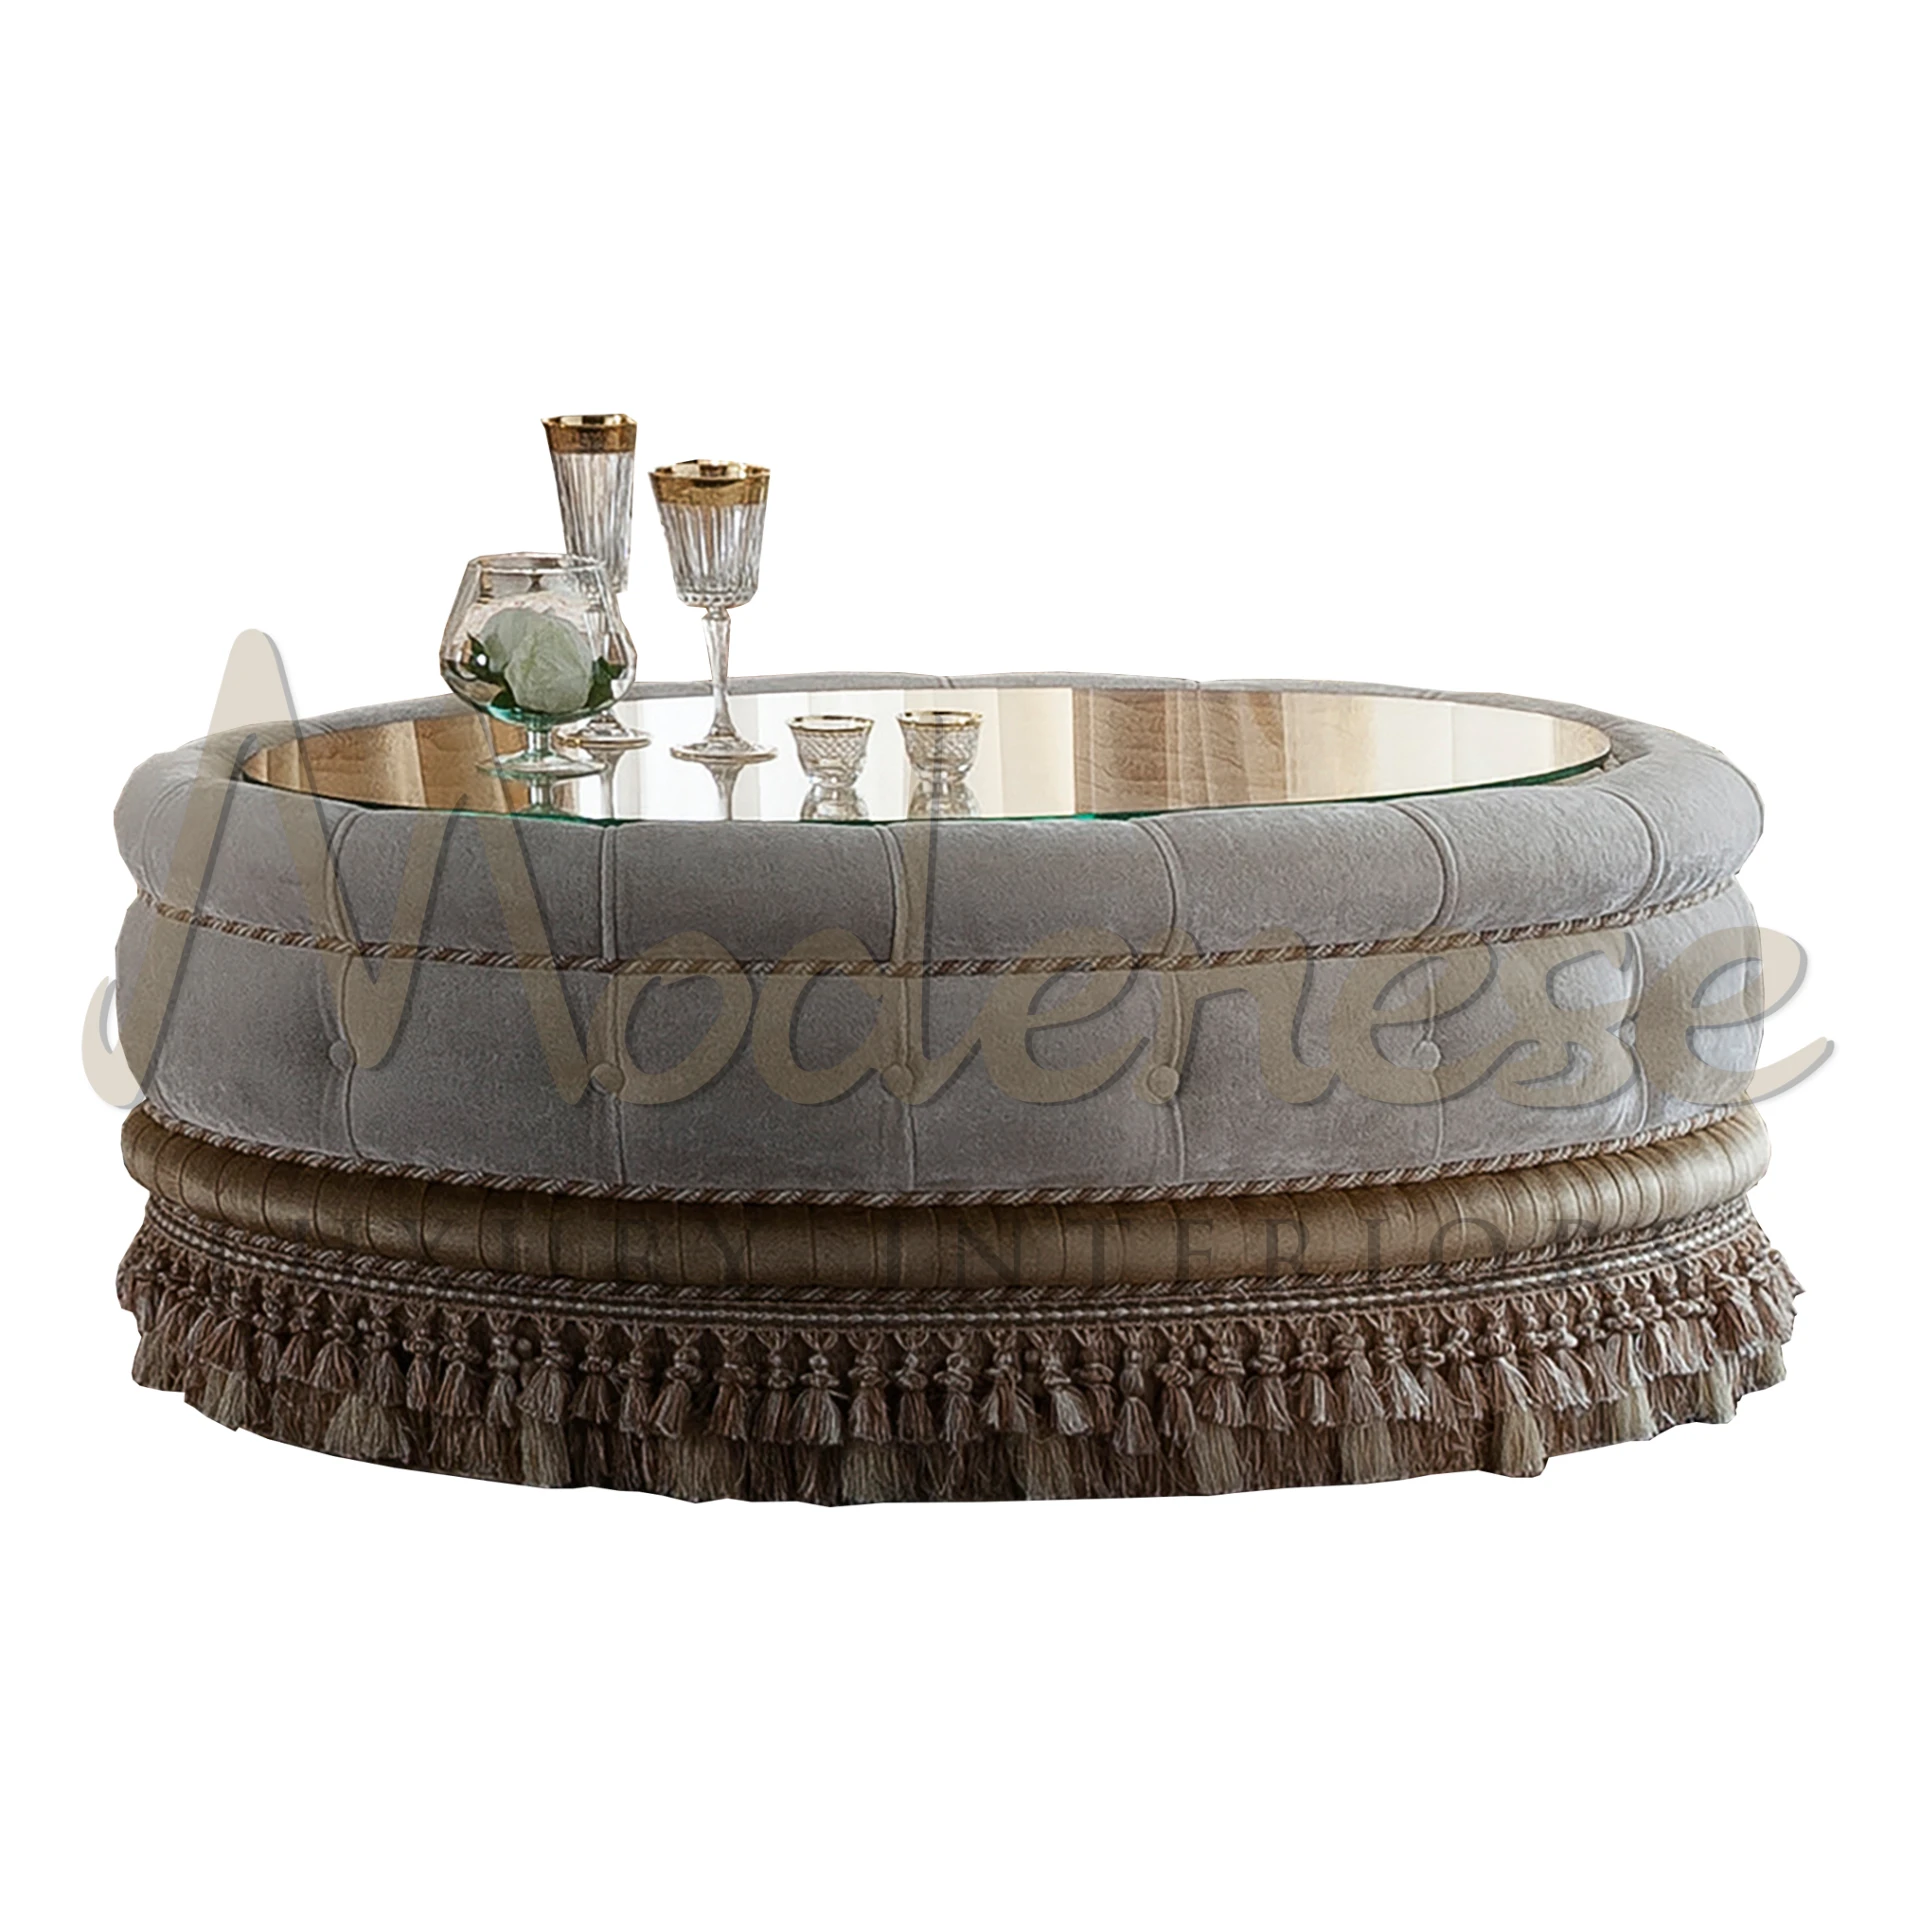 Sleek Elegance: Upholstered Oval Coffee Table for Stylish Living